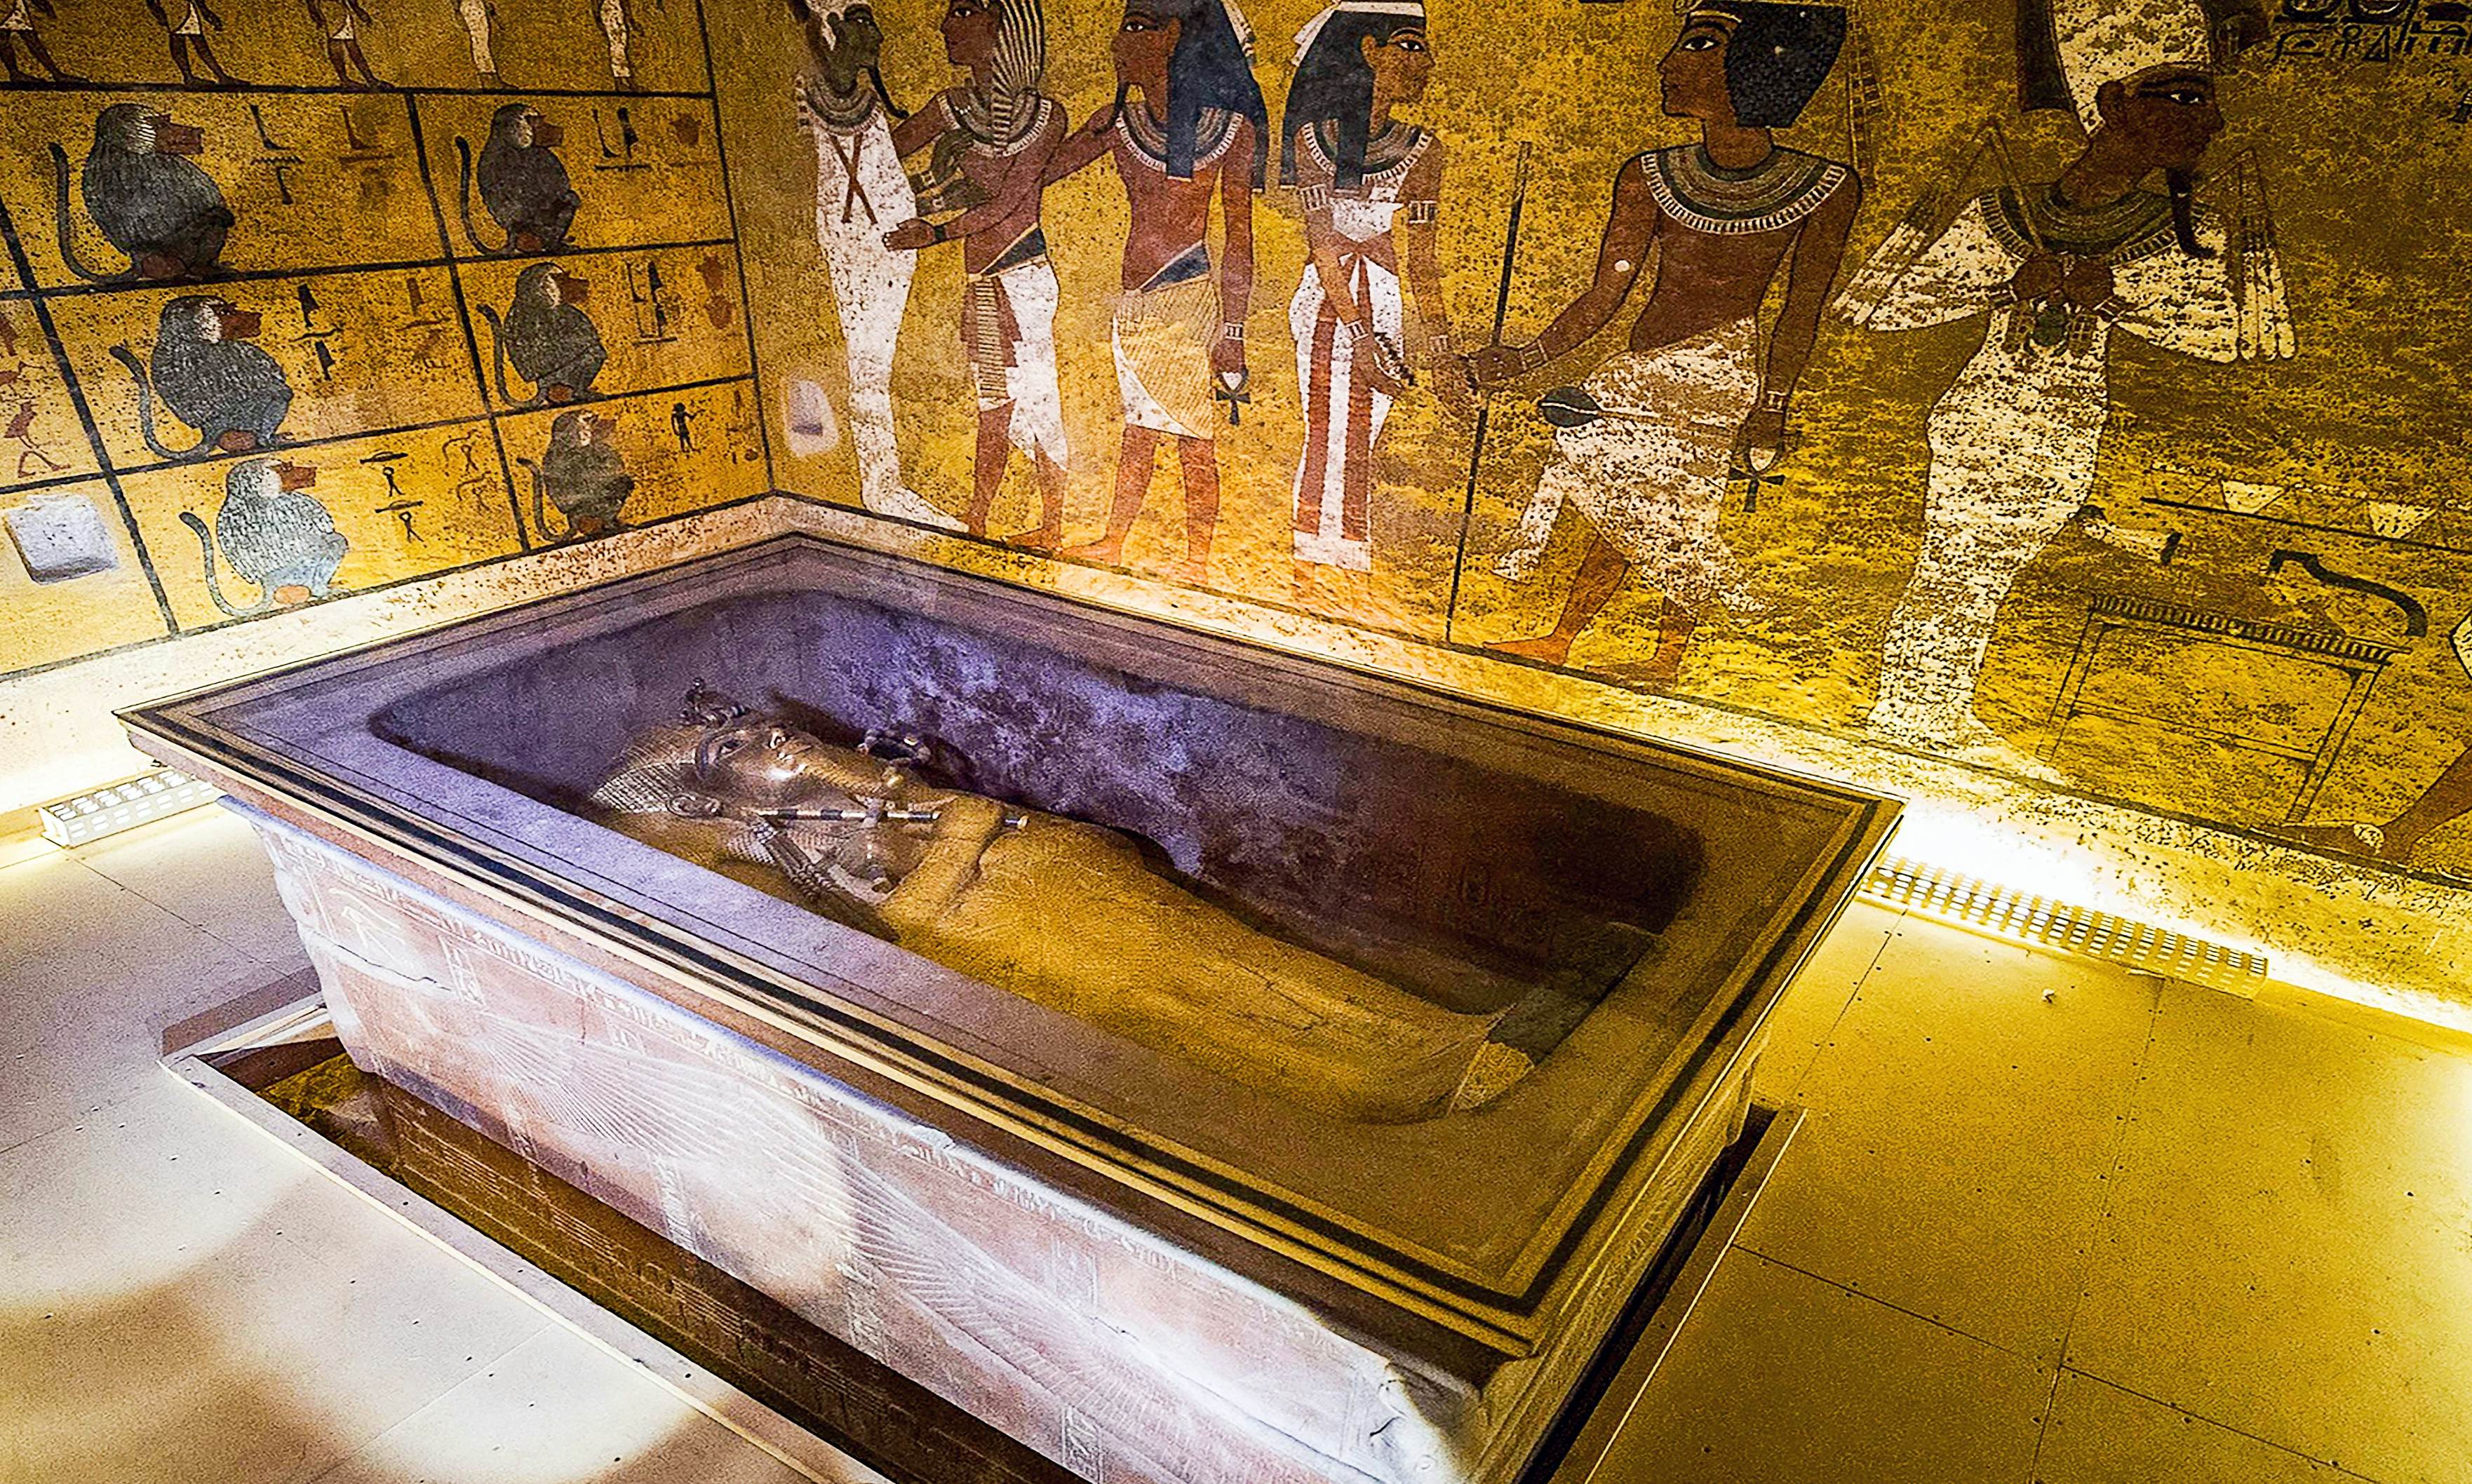 Tomb Of Tutankhamun Kv 62 Luxor Egypt Attractions Lonely Planet